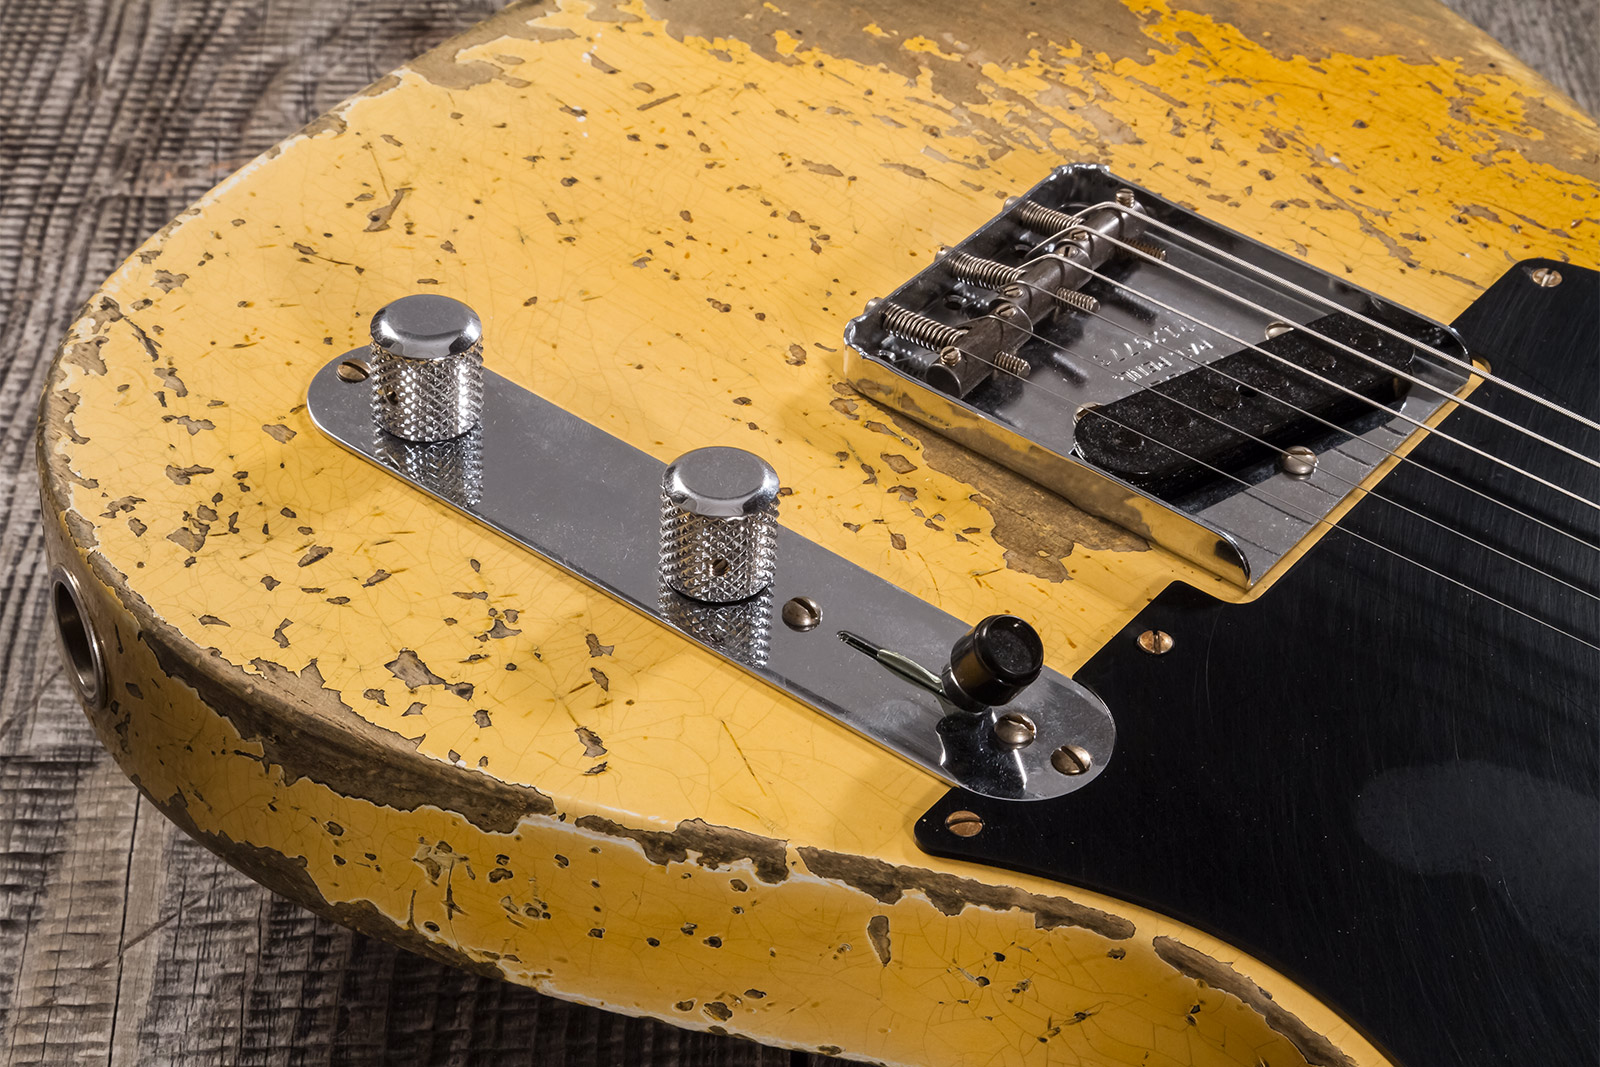 Fender Custom Shop Double Esquire/tele 1950 2s Ht Mn #r126773 - Super Heavy Relic Aged Nocaster Blonde - Guitarra eléctrica con forma de tel - Variati